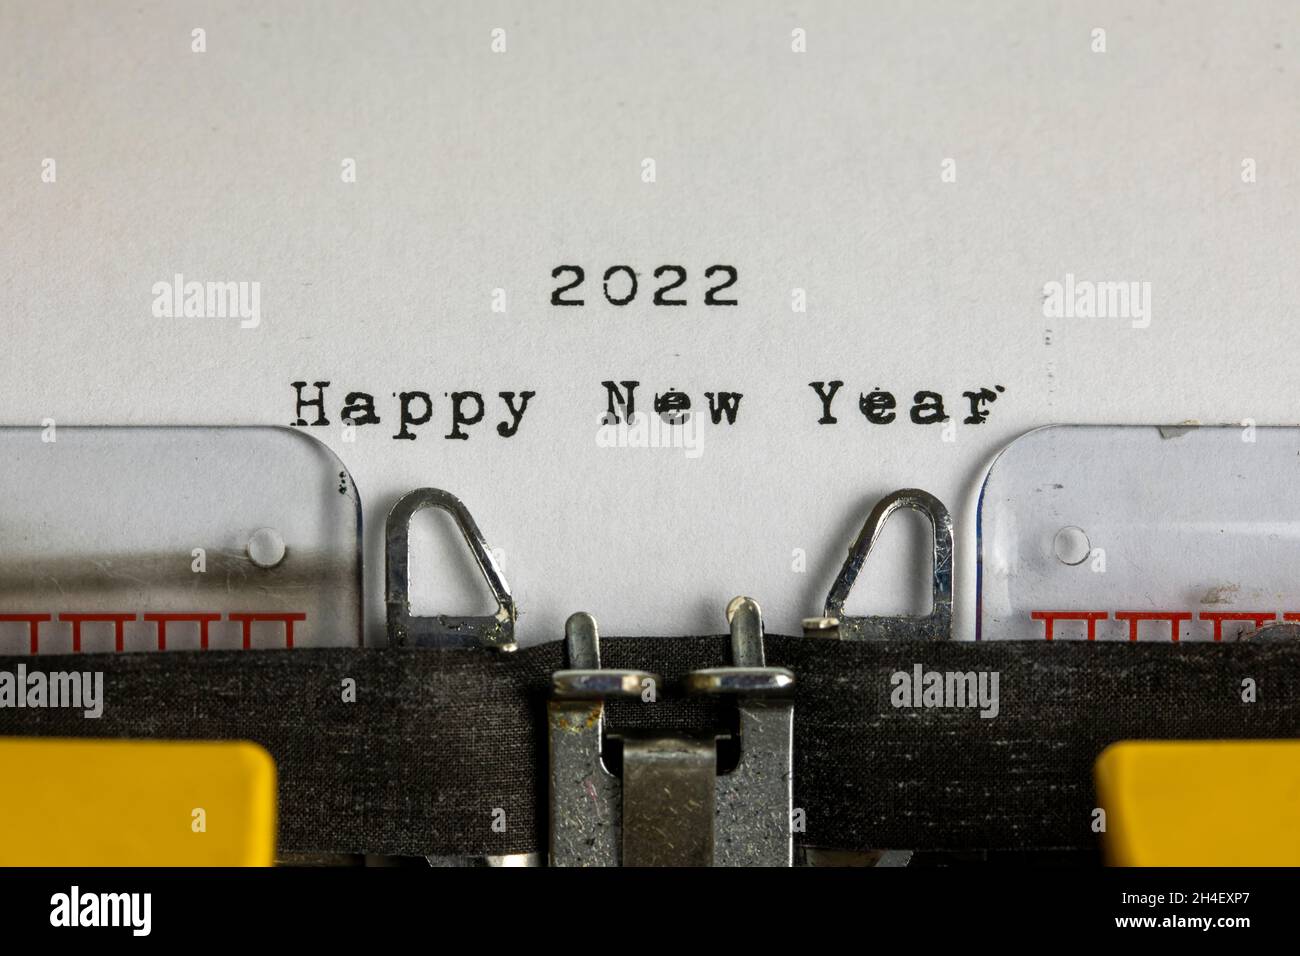 Happy New Year 2022 written on an old typewriter Stock Photo